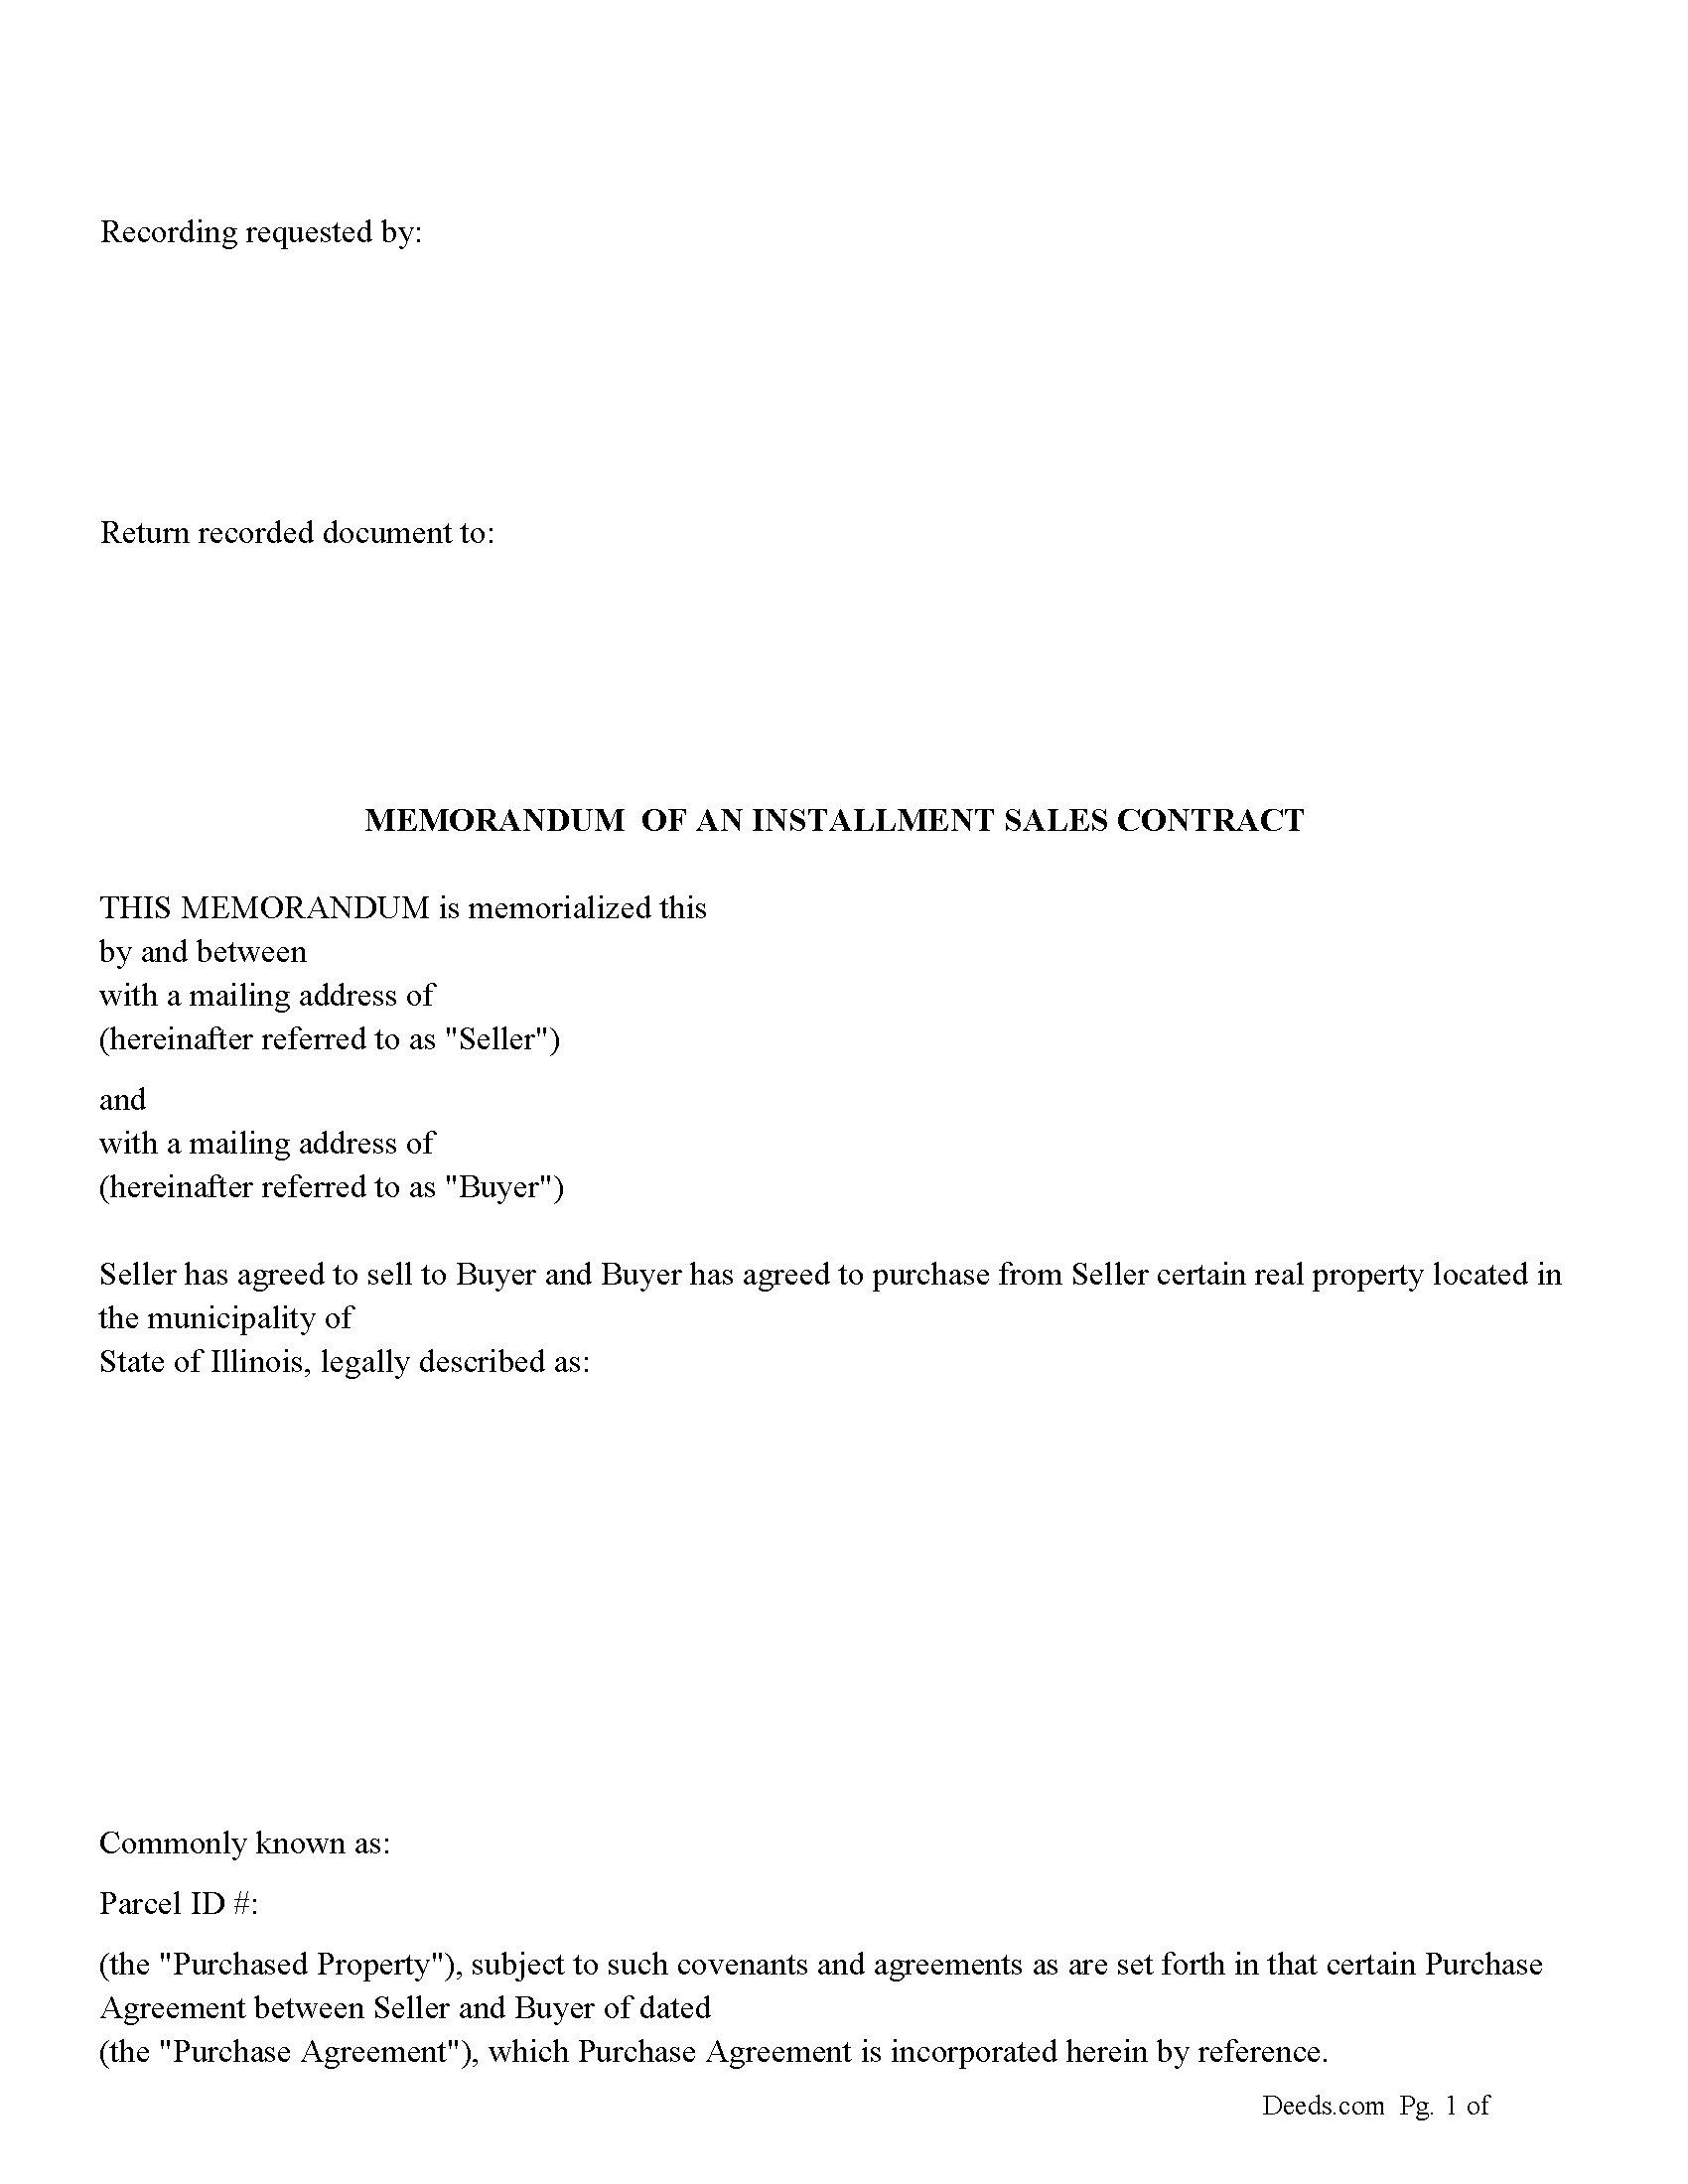 Lee County Memorandum of an Installment Sales Contract Form